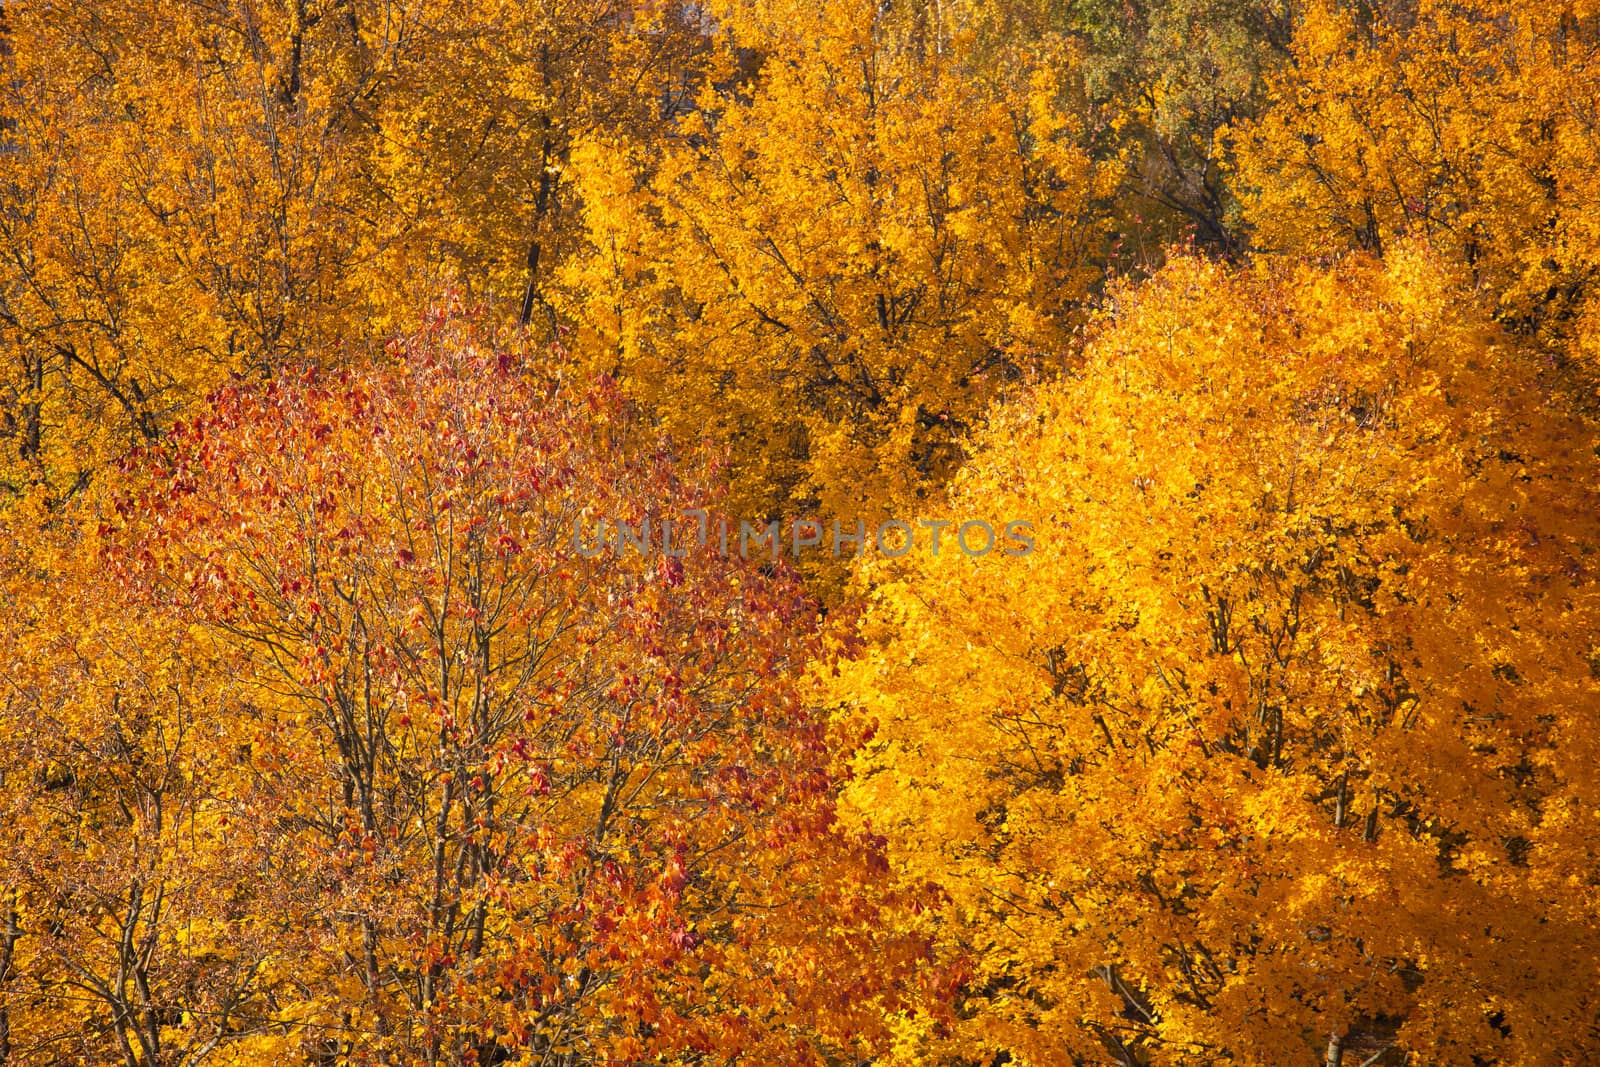 Beautiful nature background of orange autumn birch leaves